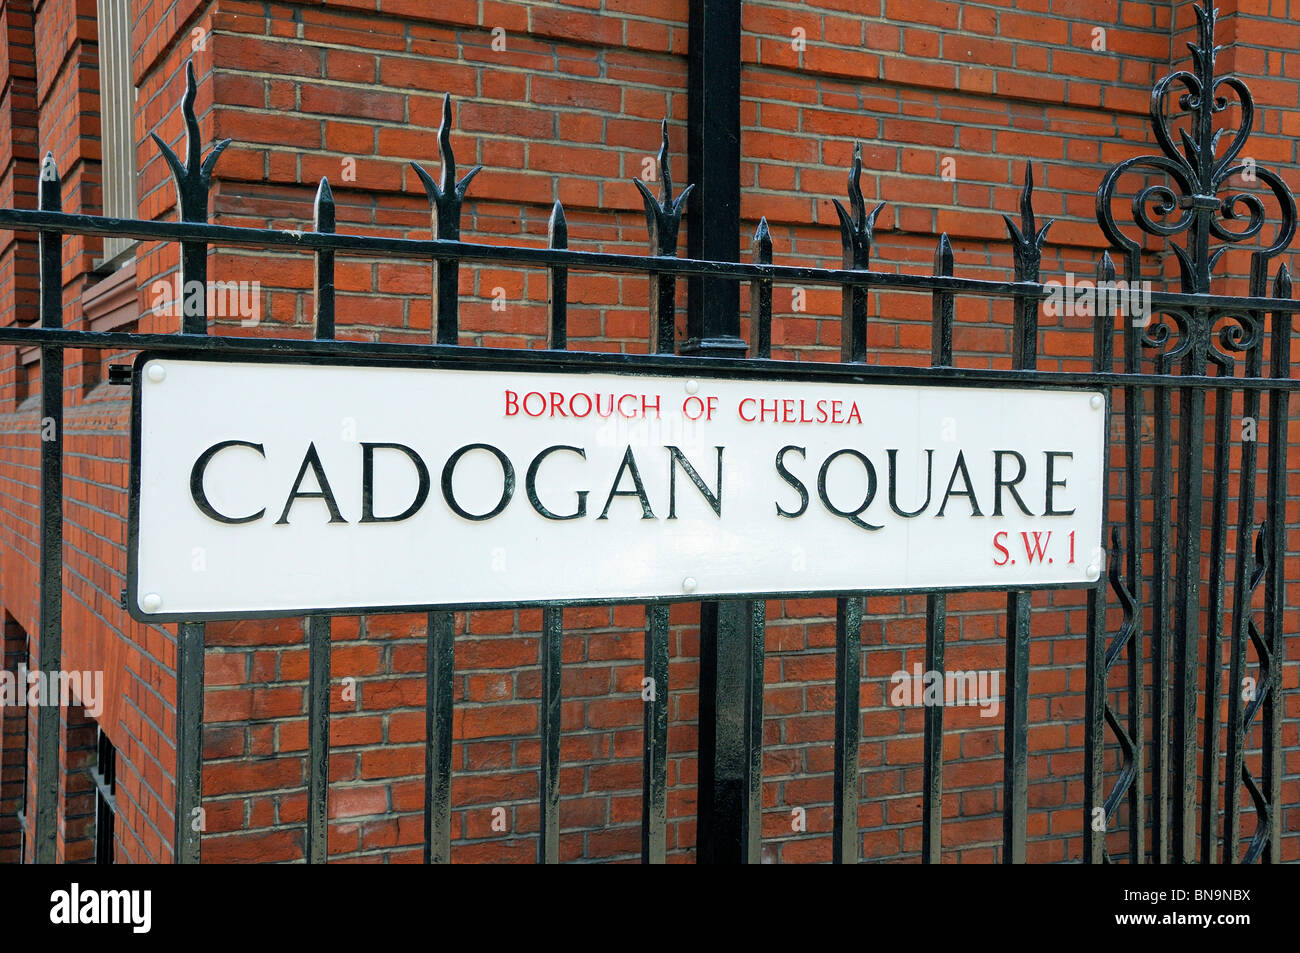 Cadogan Square sign, London Borough of Chelsea, SW1 England UK Stock Photo